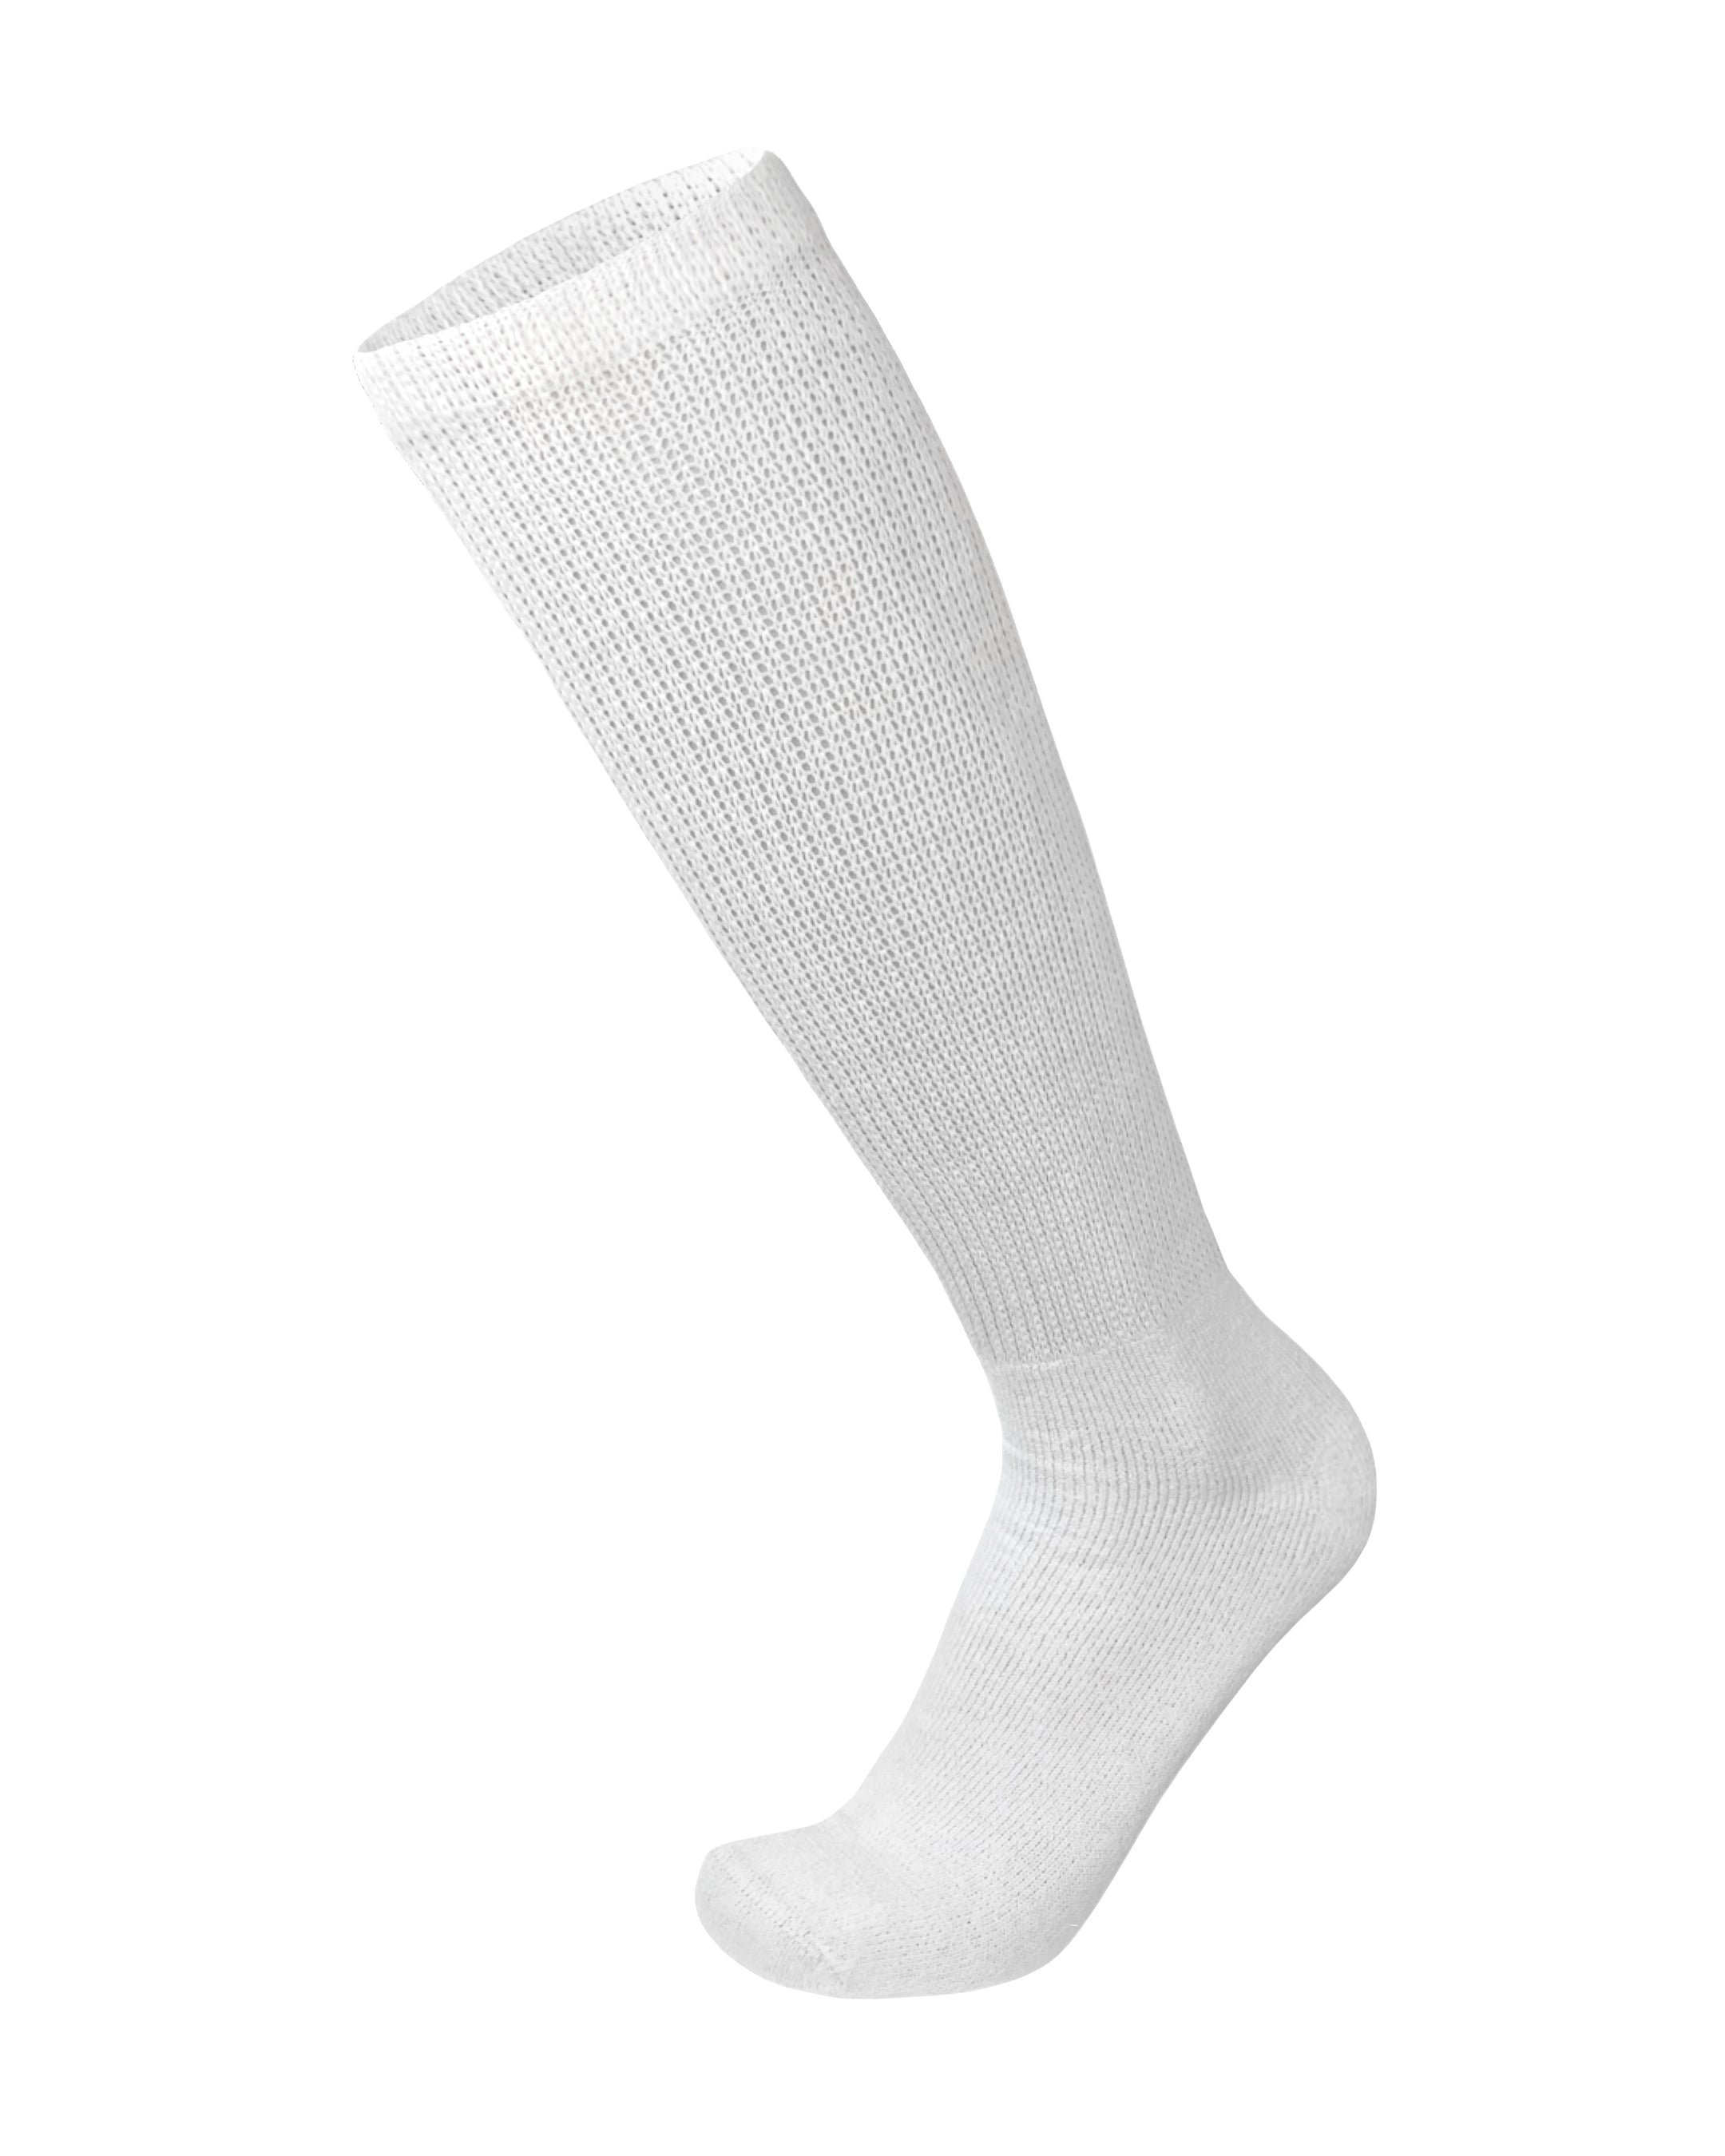 Men's Diabetic Over the Calf Knee High Cotton Socks, 6 Pairs